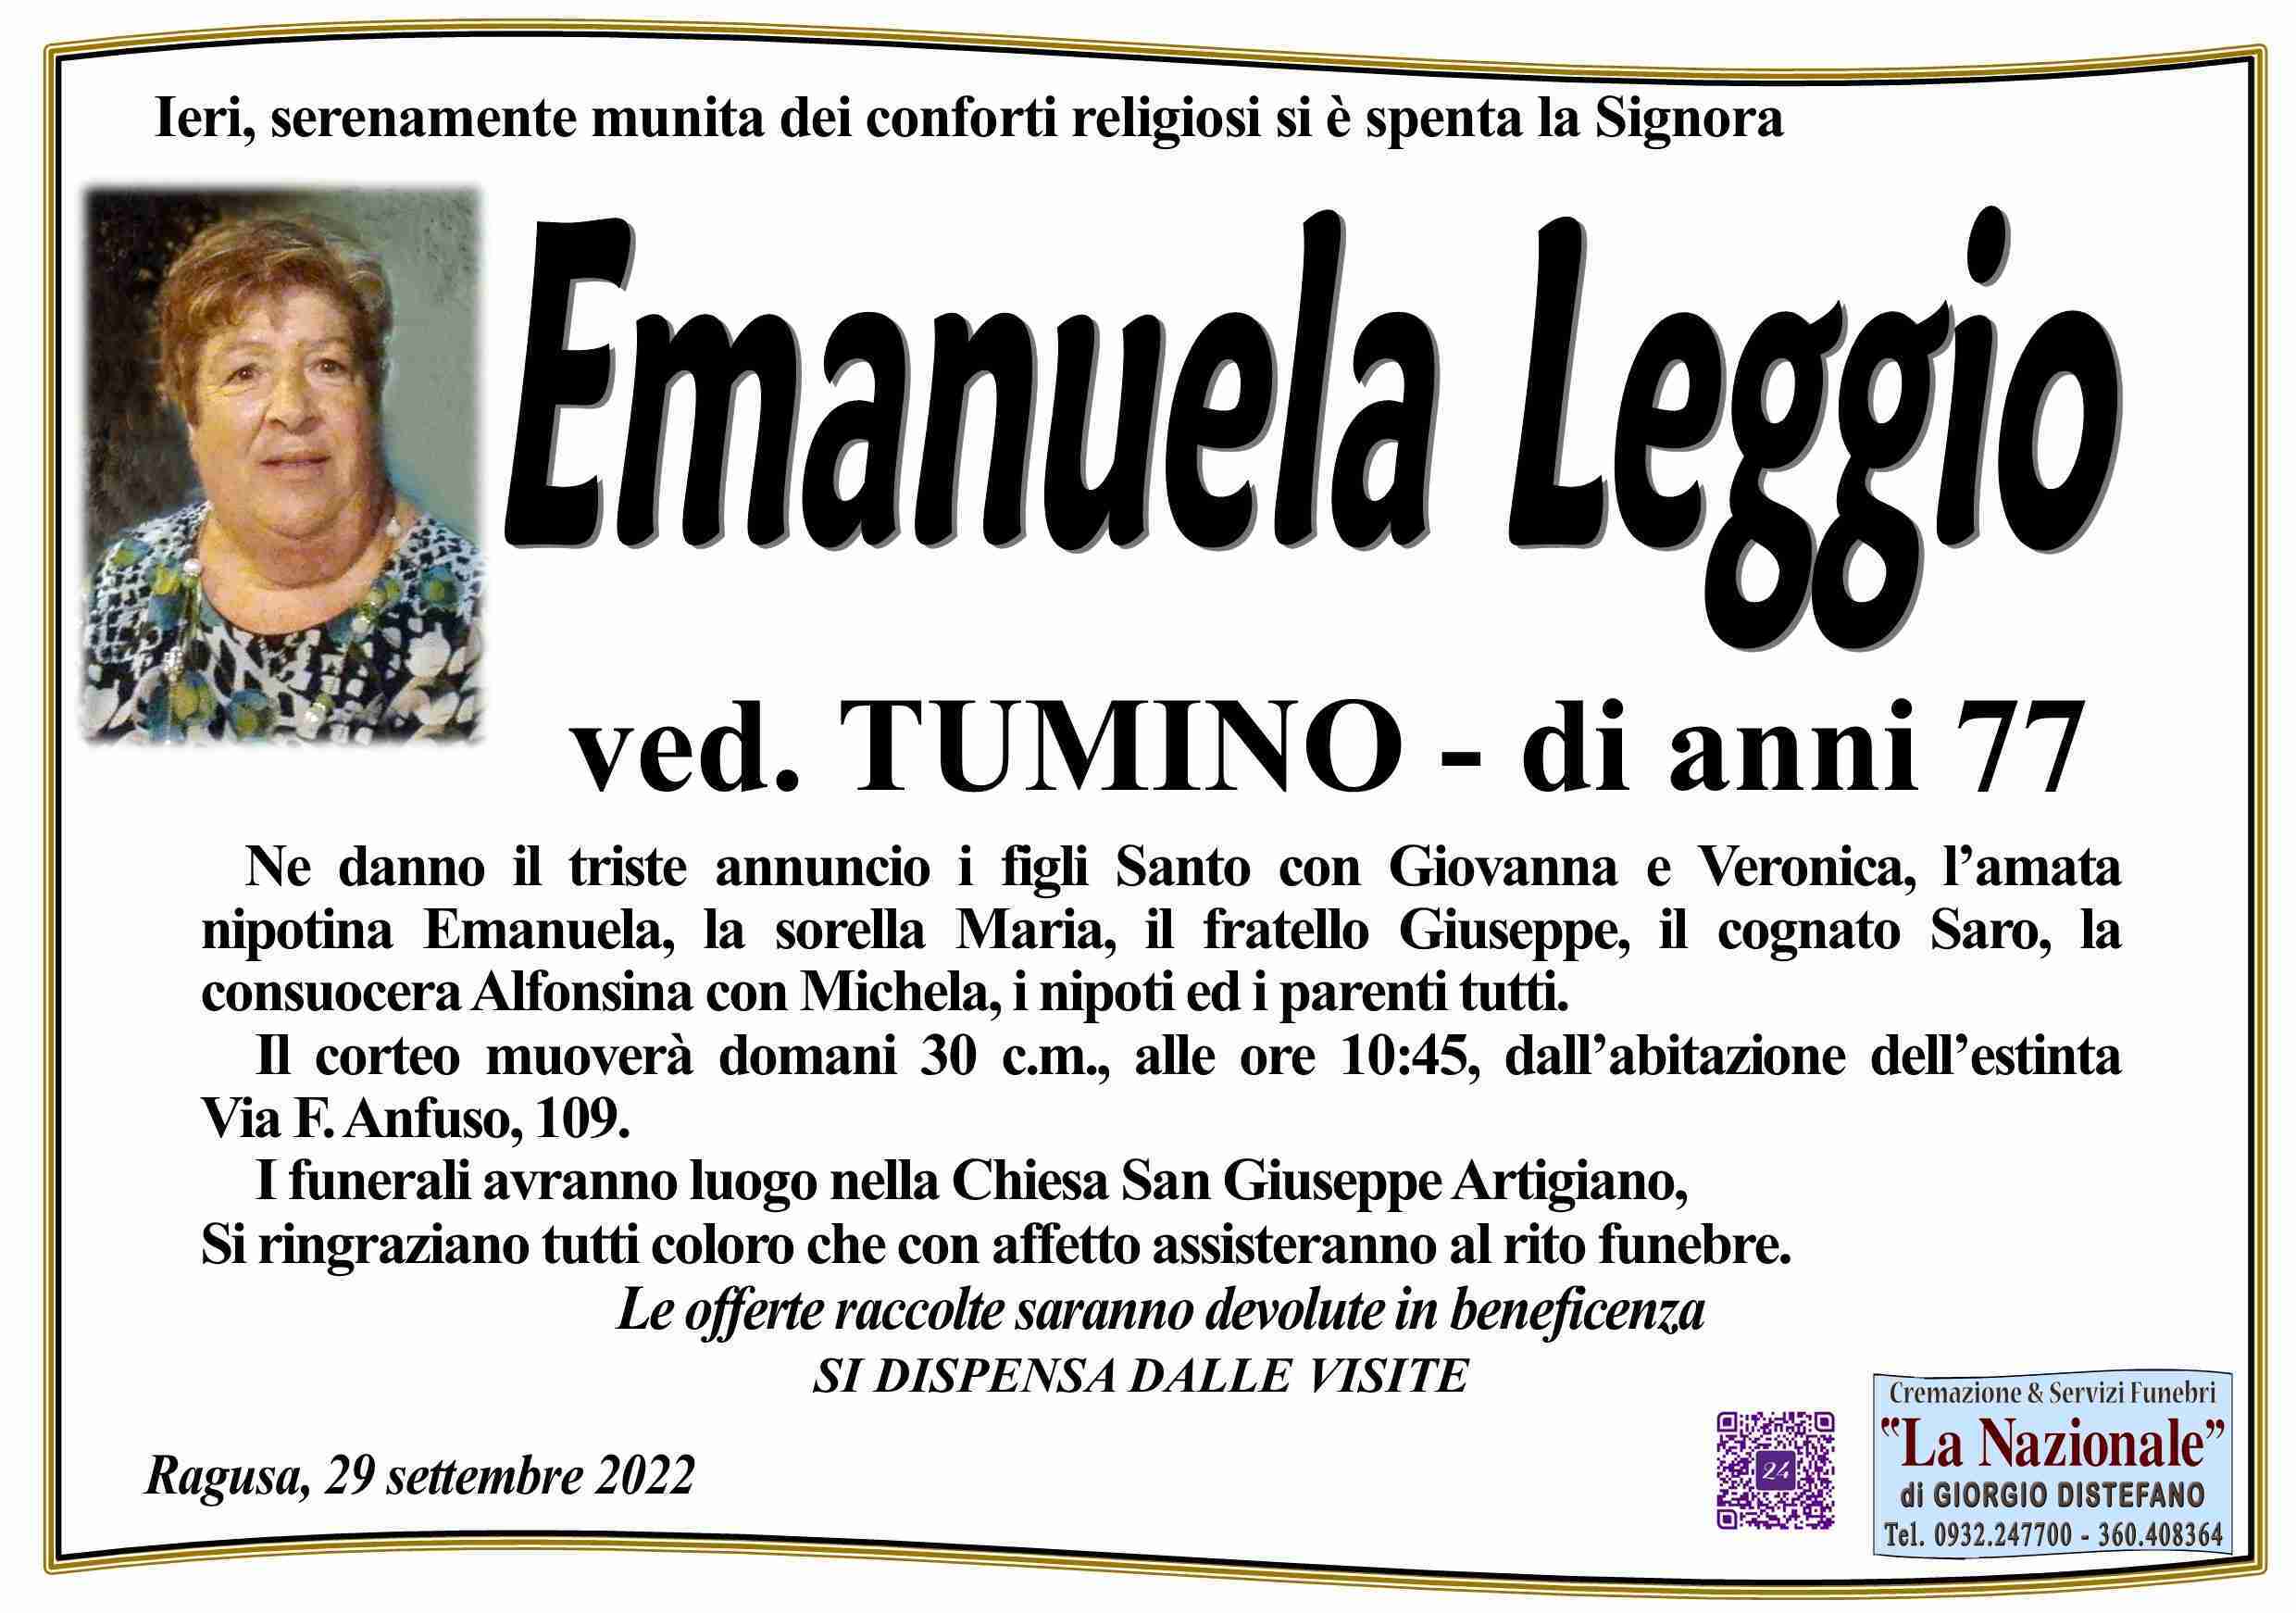 Emanuela Leggio